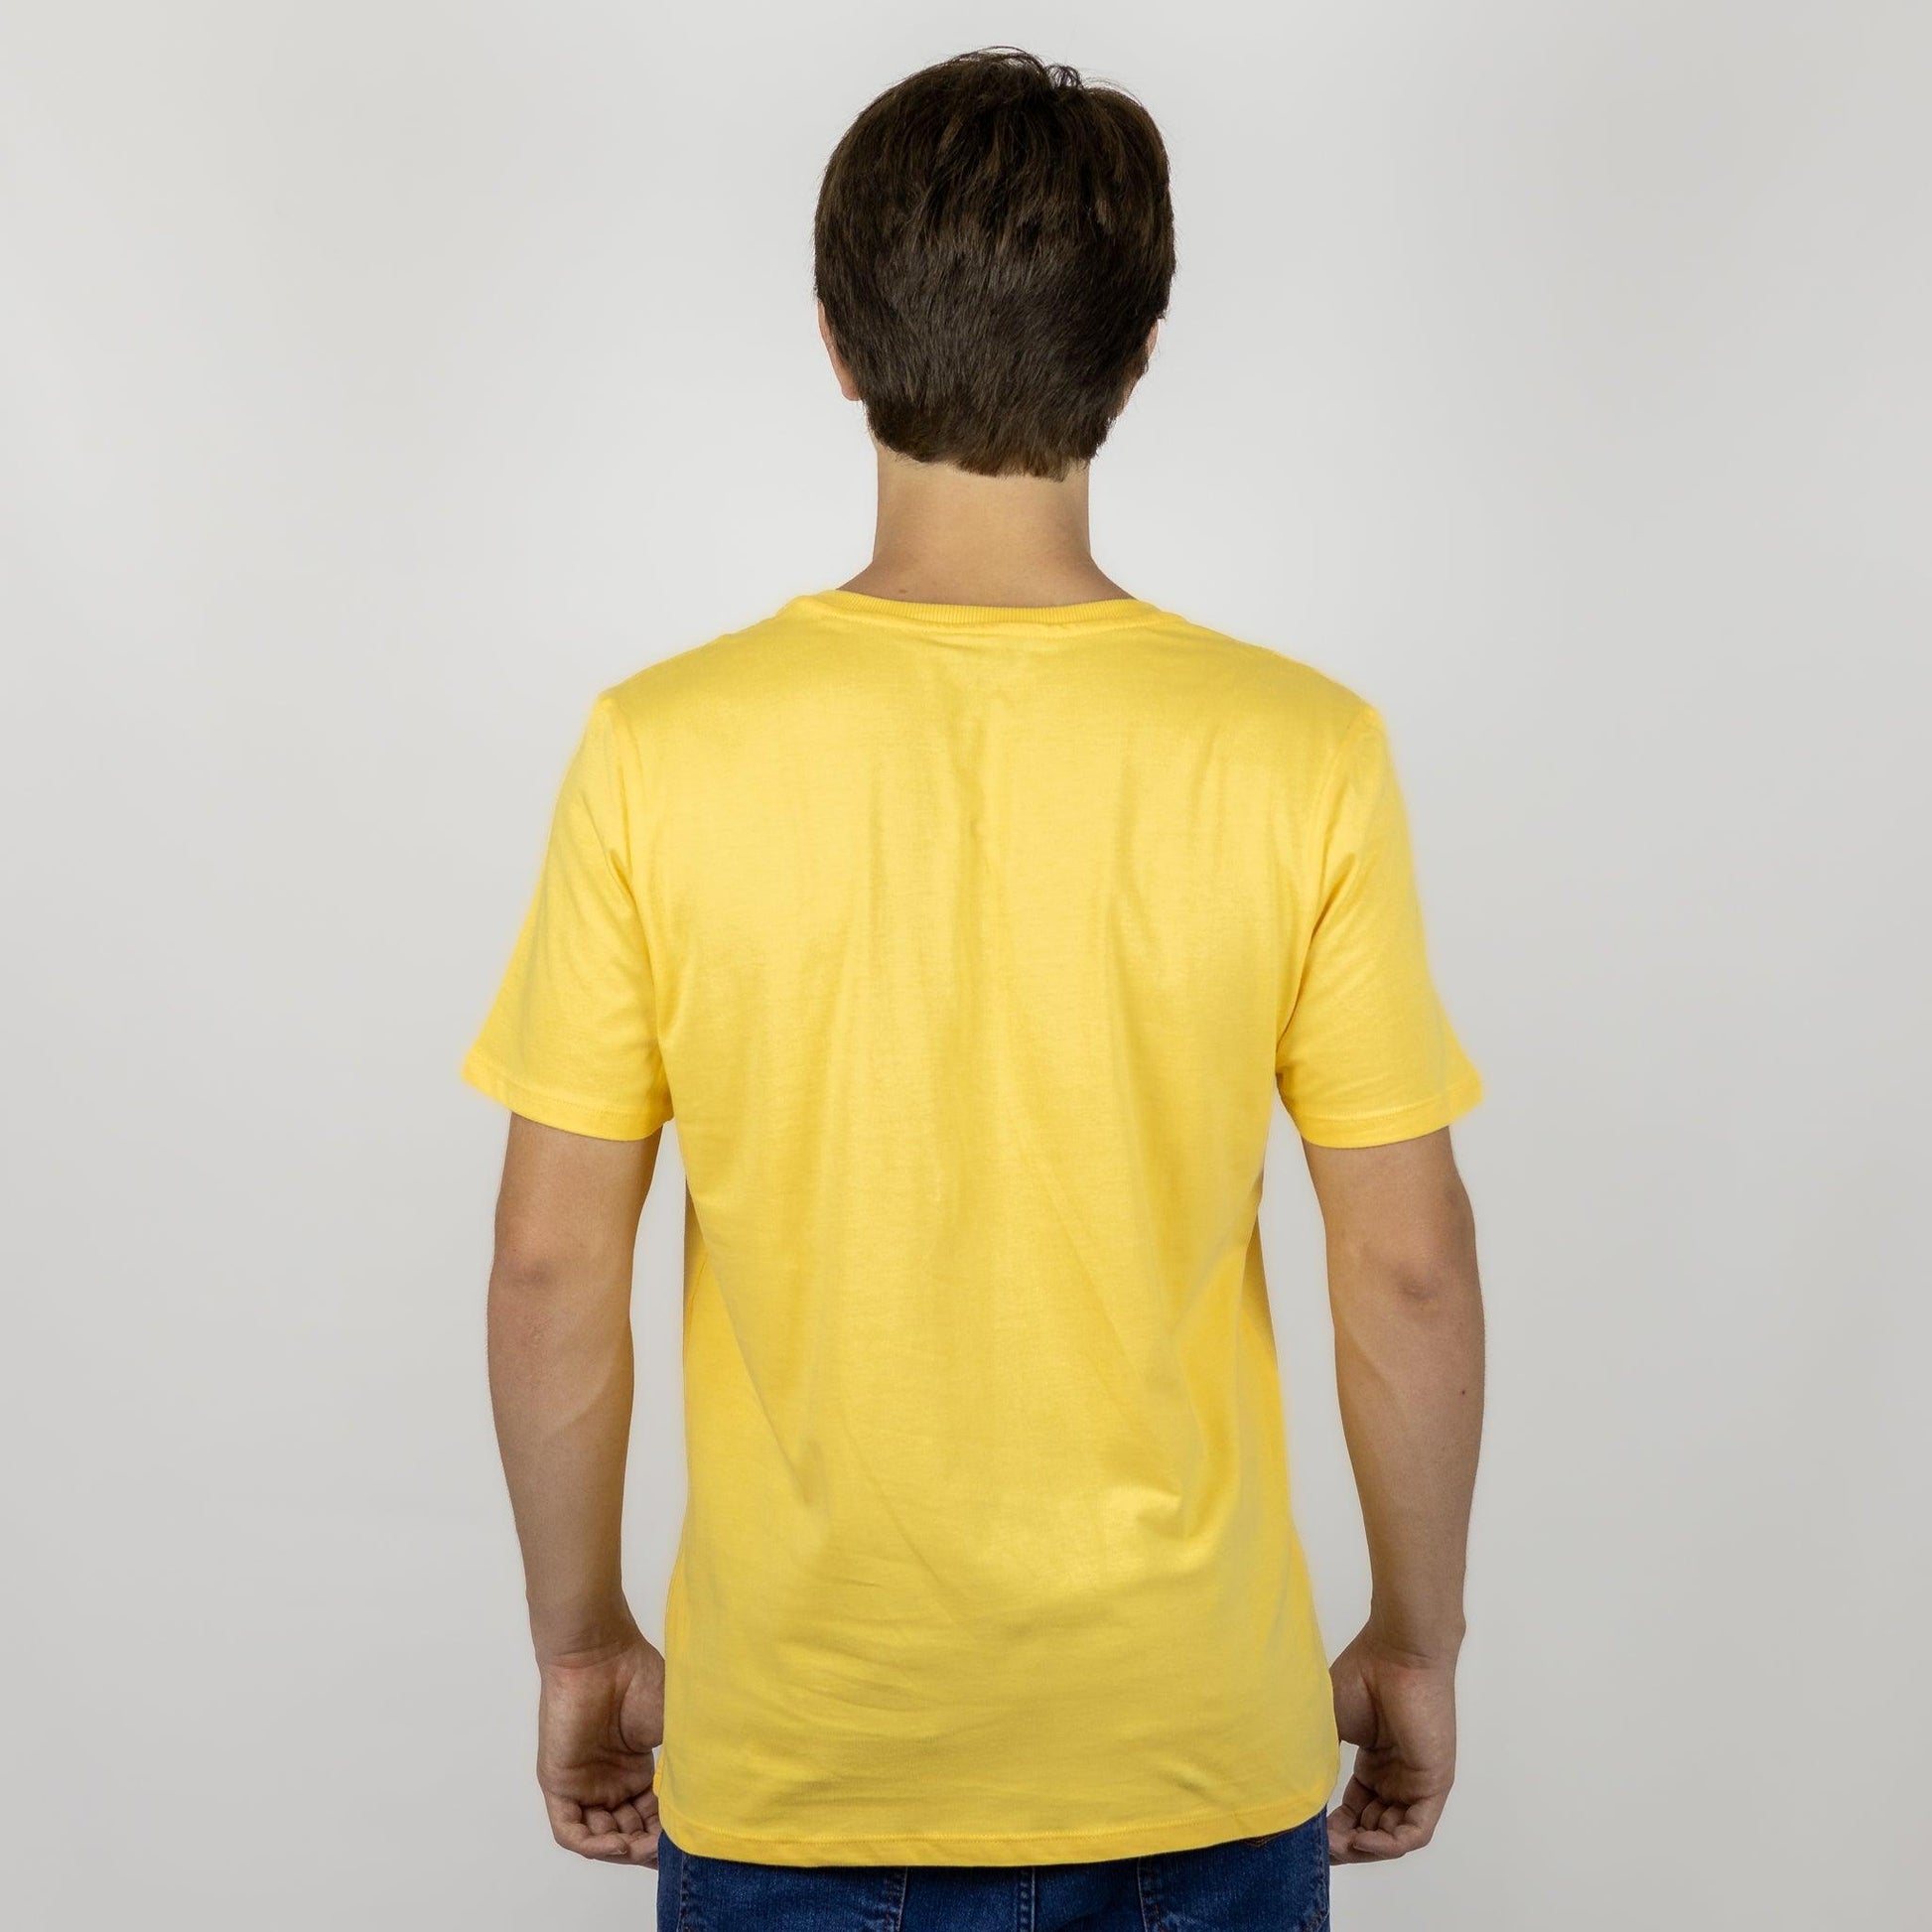 Camiseta Básica Strut Estampa Deserto Amarela - Strut